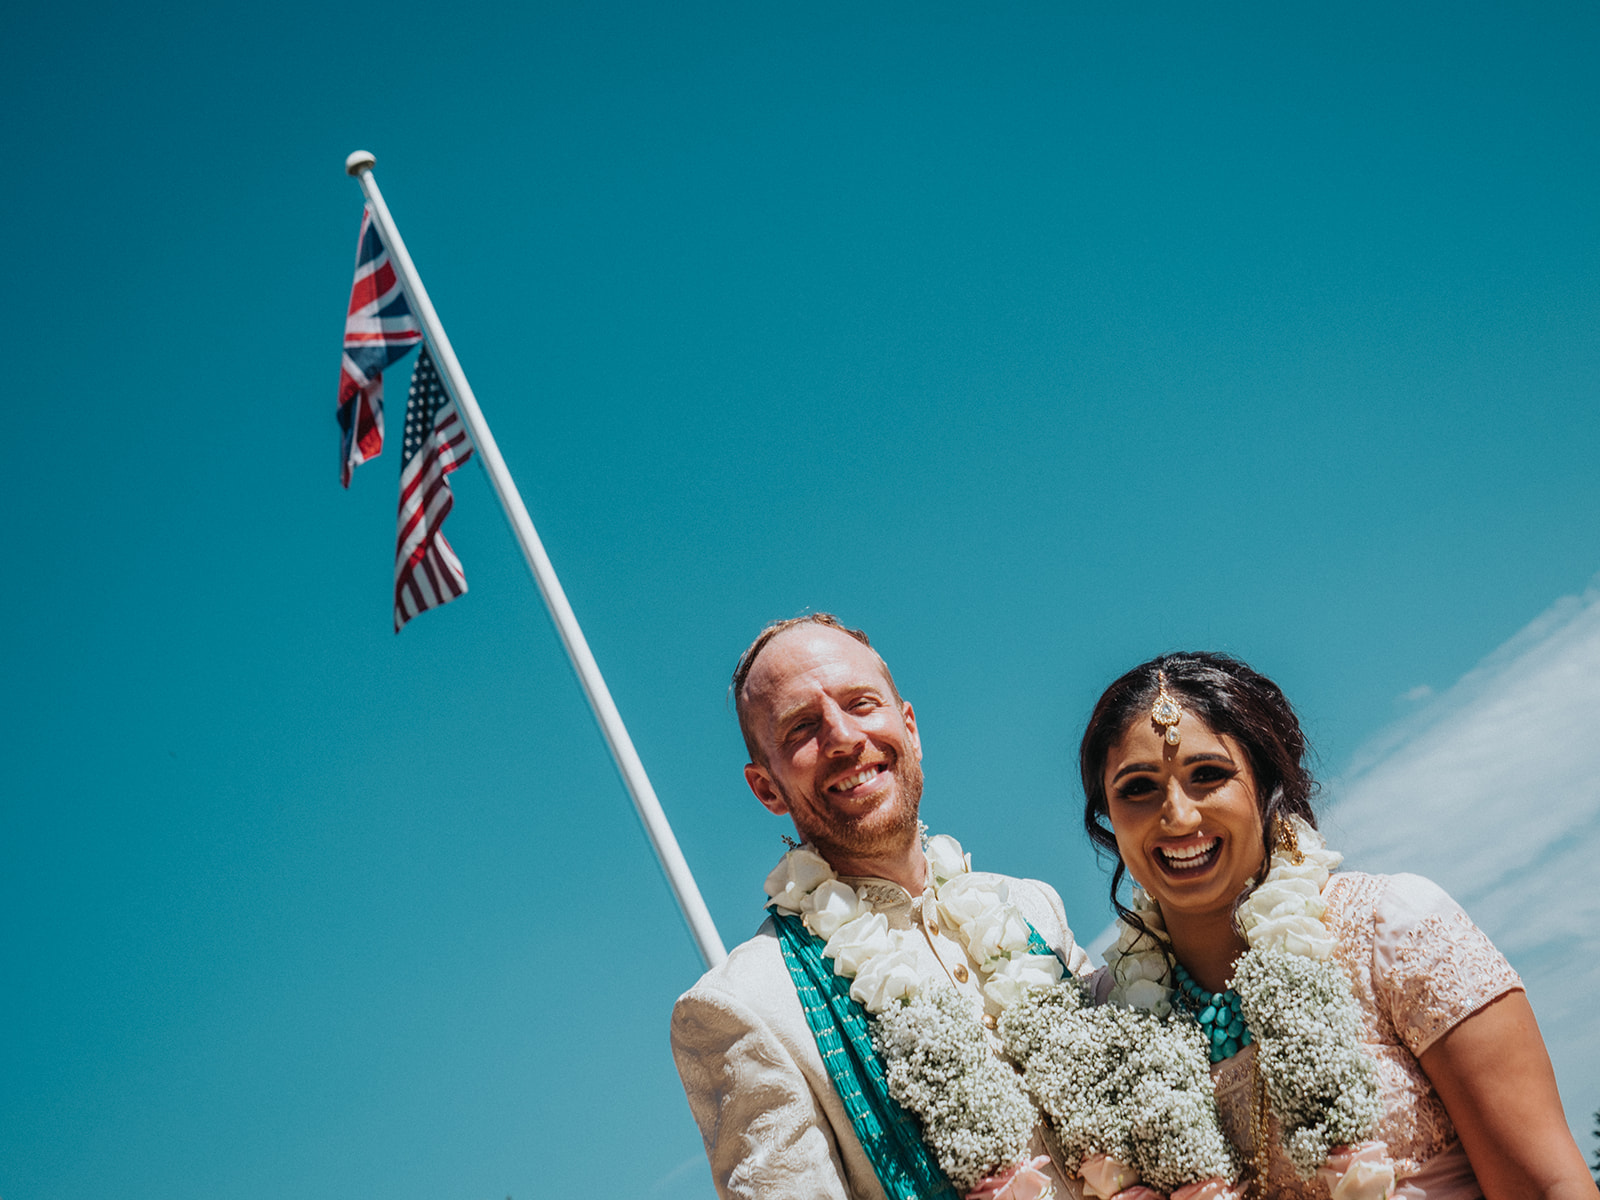 Fusion Wedding- Michael Briggs Photography- Multifaith Wedding- English Indian Wedding- Unconventional Wedding- Wedding Photography- Unique Wedding Ideas- Indian Bridalwear- Unique Bridalwear- Quirky Wedding- Wedding Planning